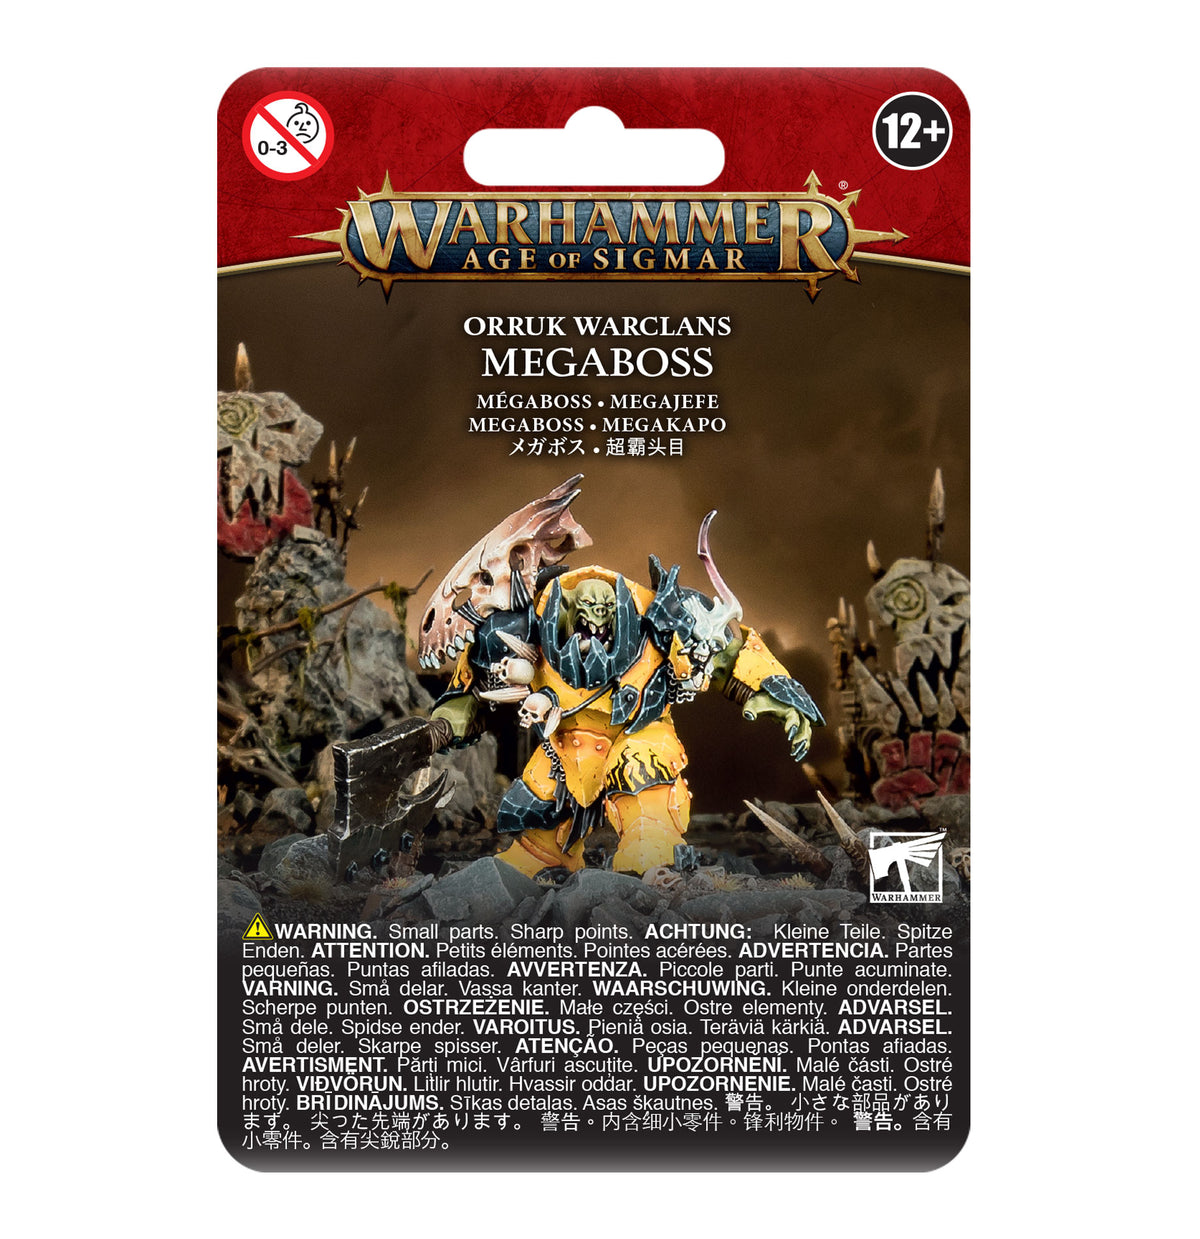 Orruk Warclans - Megaboss (Warhammer Age of Sigmar)